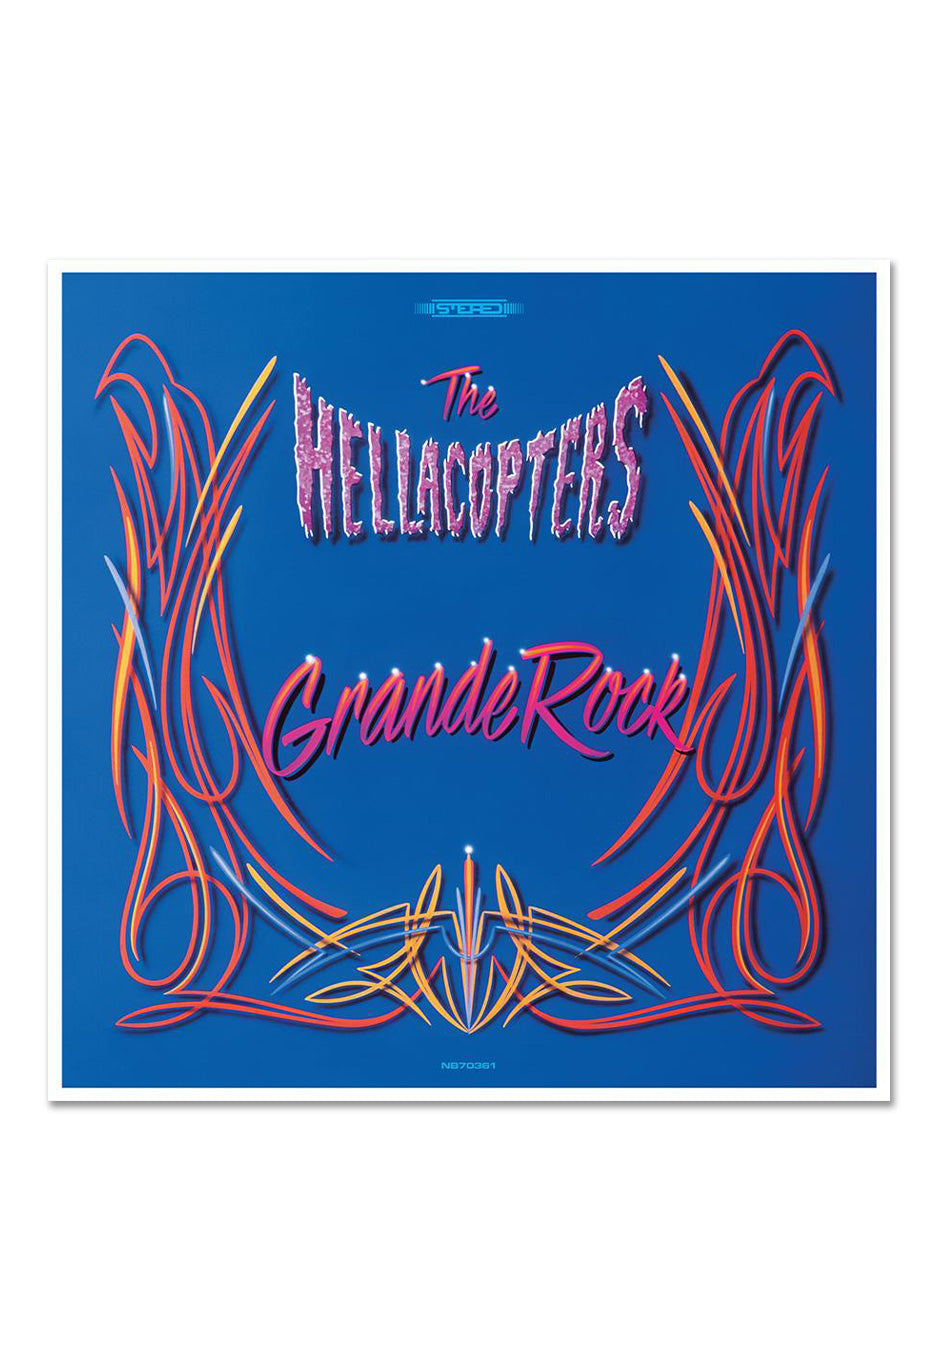 The Hellacopters - Grande Rock Revisited Ltd. Transparent Magenta - Colored 2 Vinyl